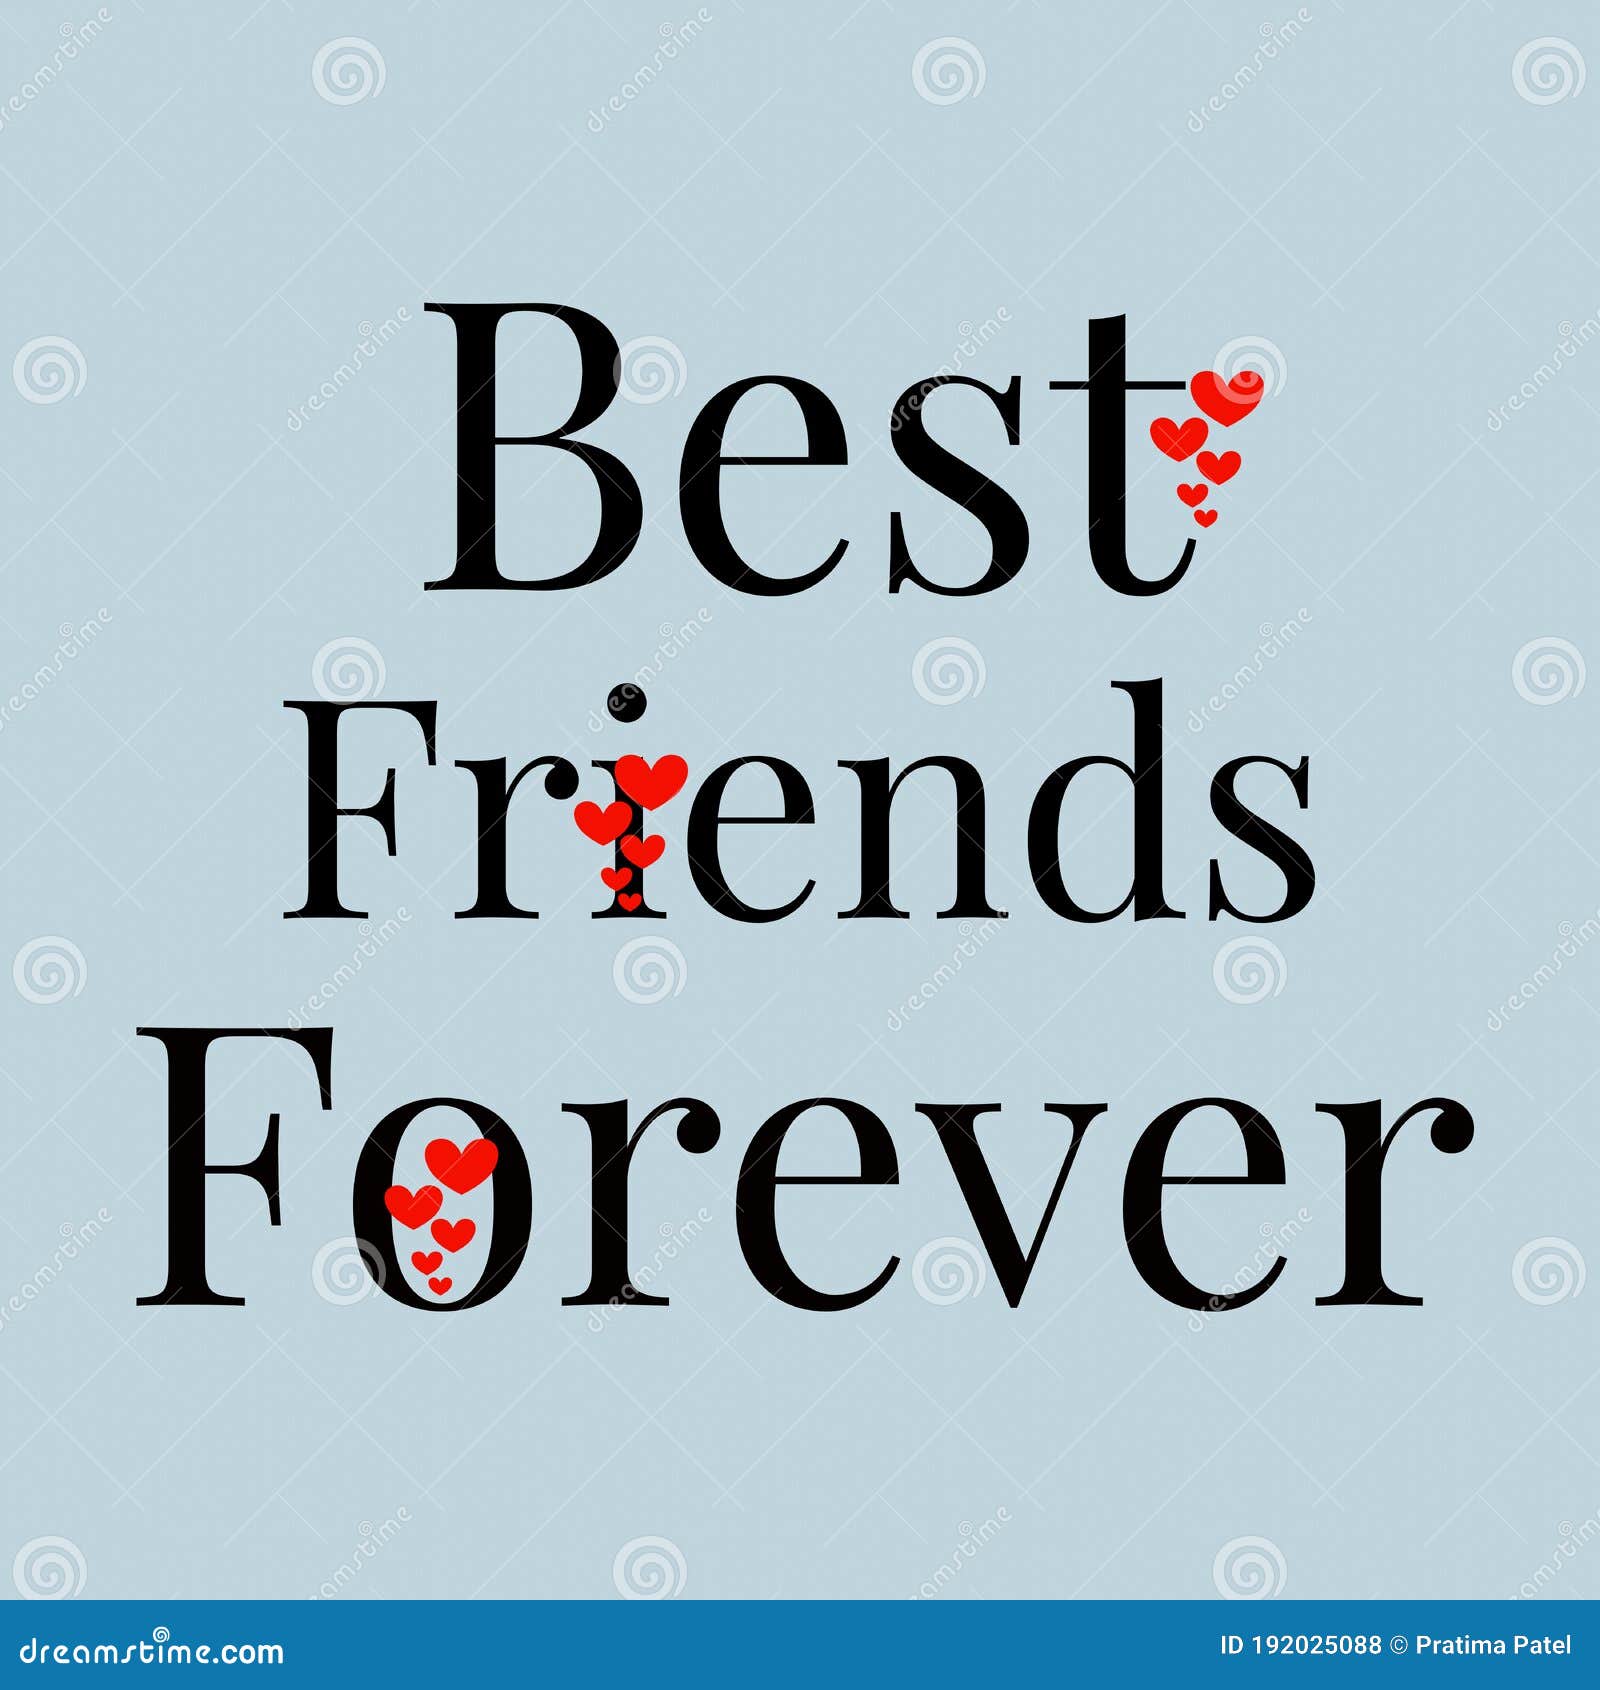 Best Friends Forever Photos  11301   Best friends forever images  Friends forever pictures Best friend images